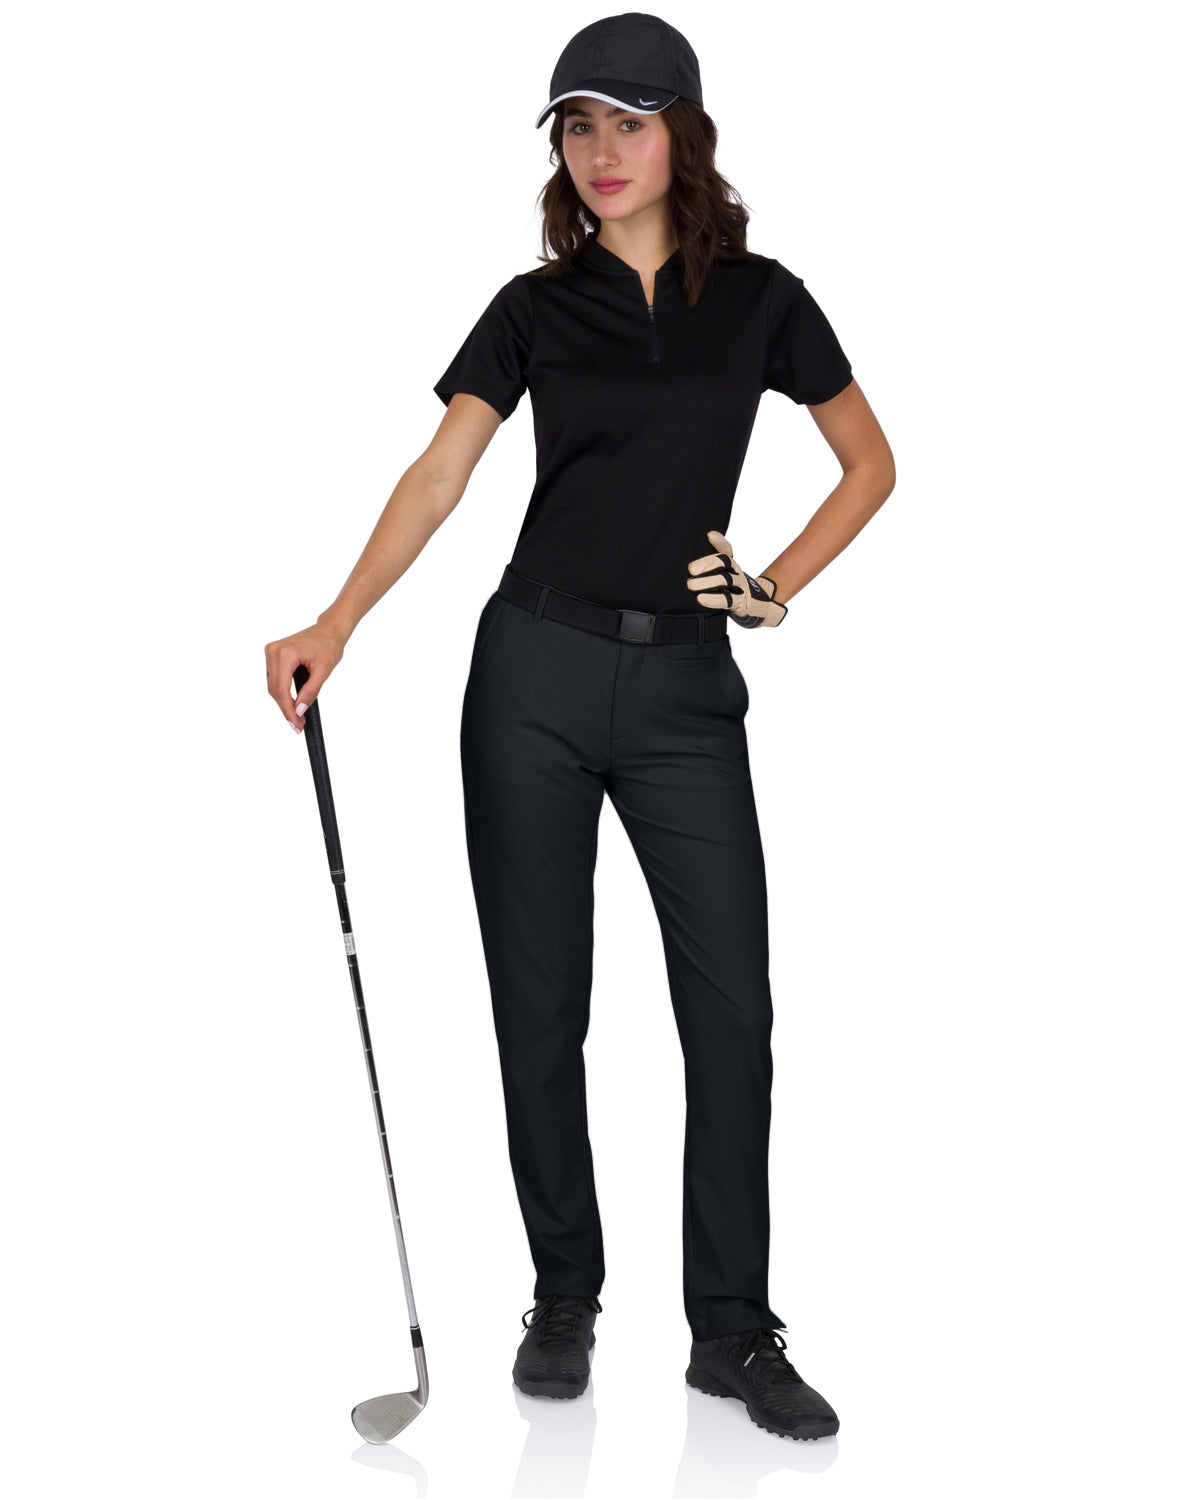 Womens Golf Pants Online